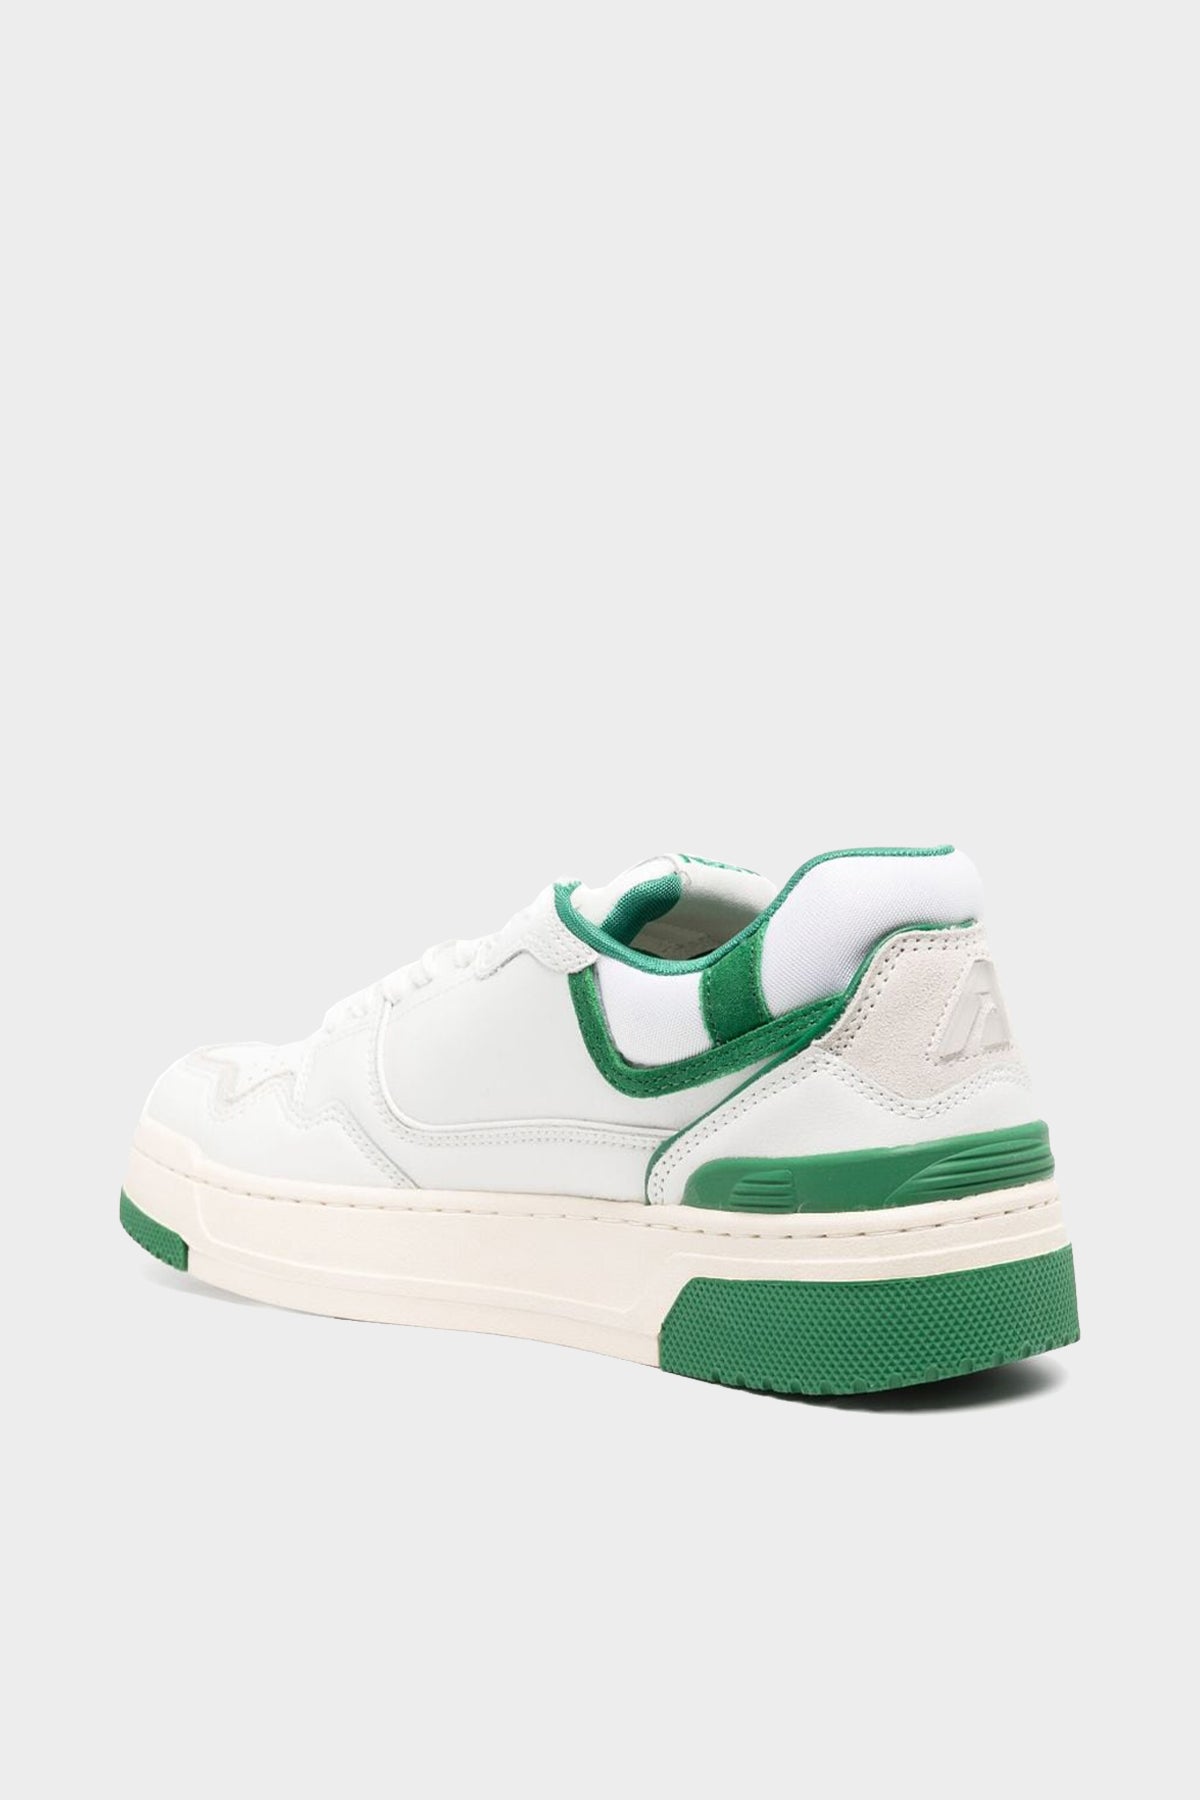 CLC Leather Men Sneaker in Green White - shop-olivia.com